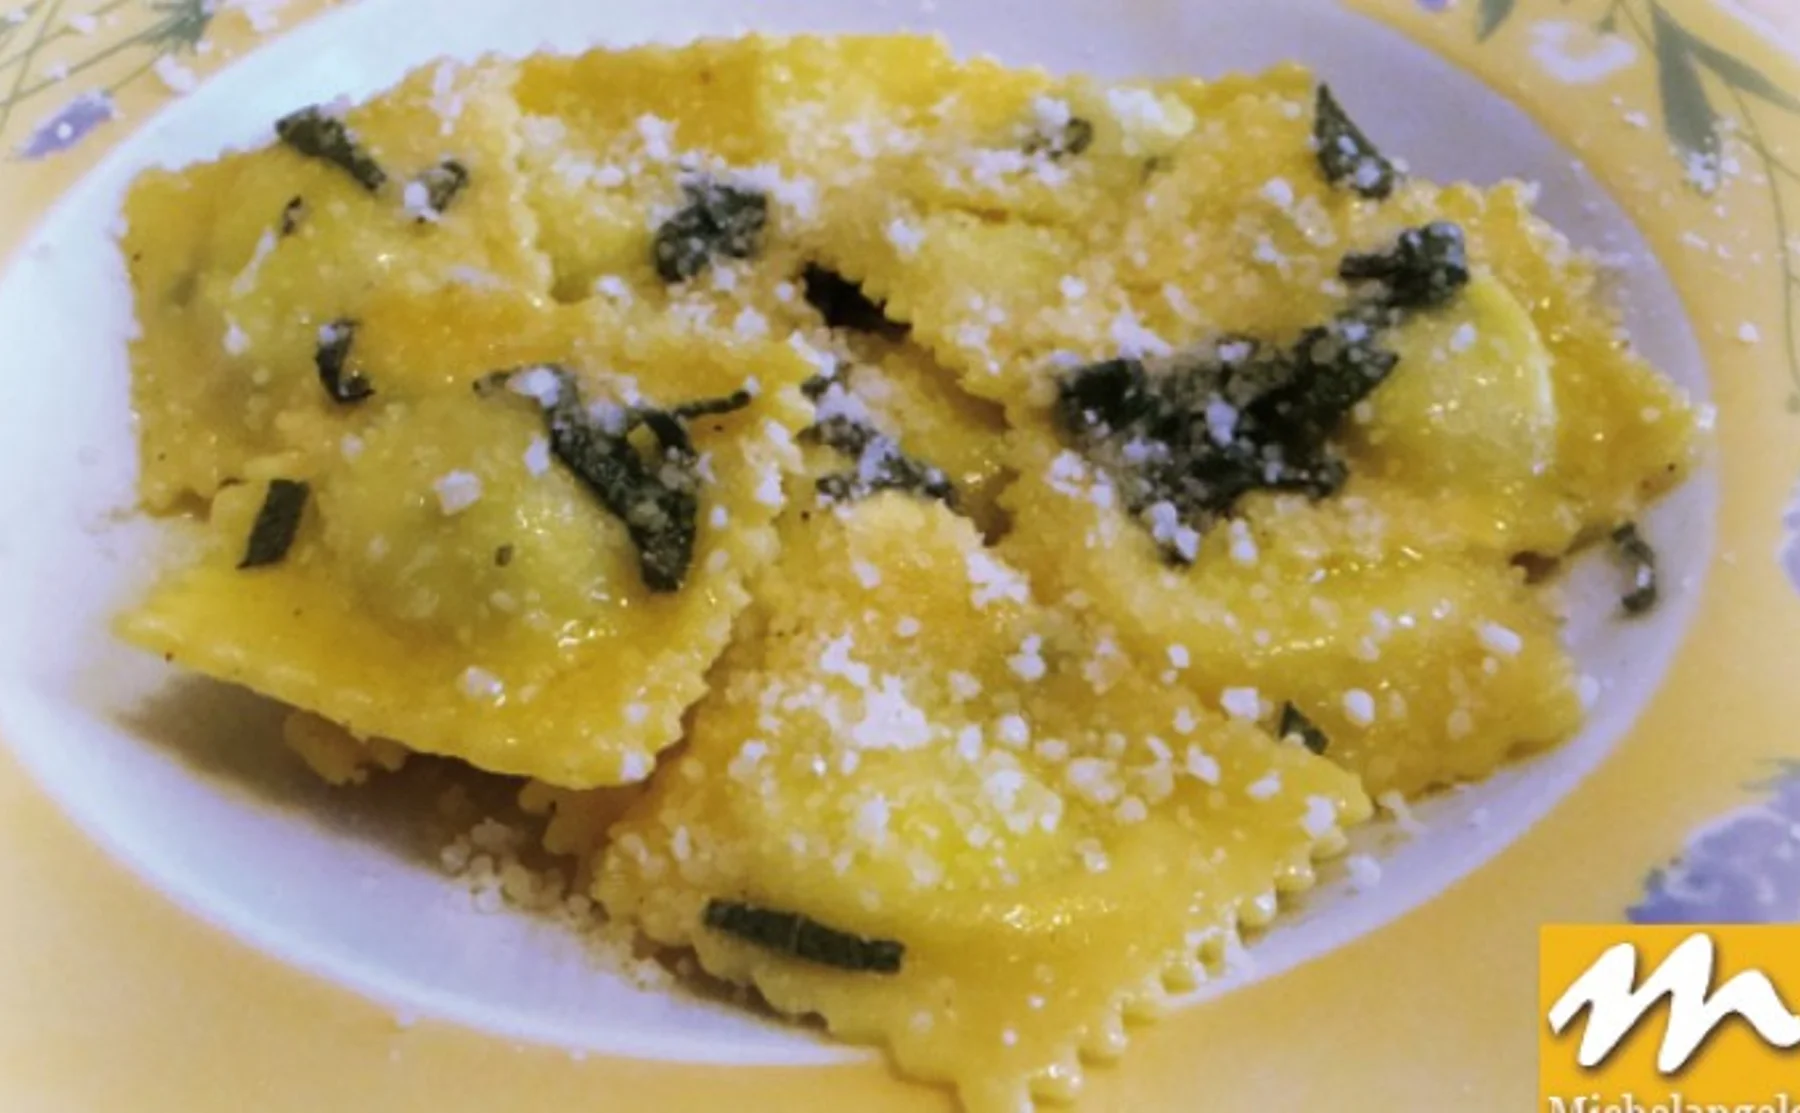 Taste of Italy, an Authentic Italian Food Experience - 486041